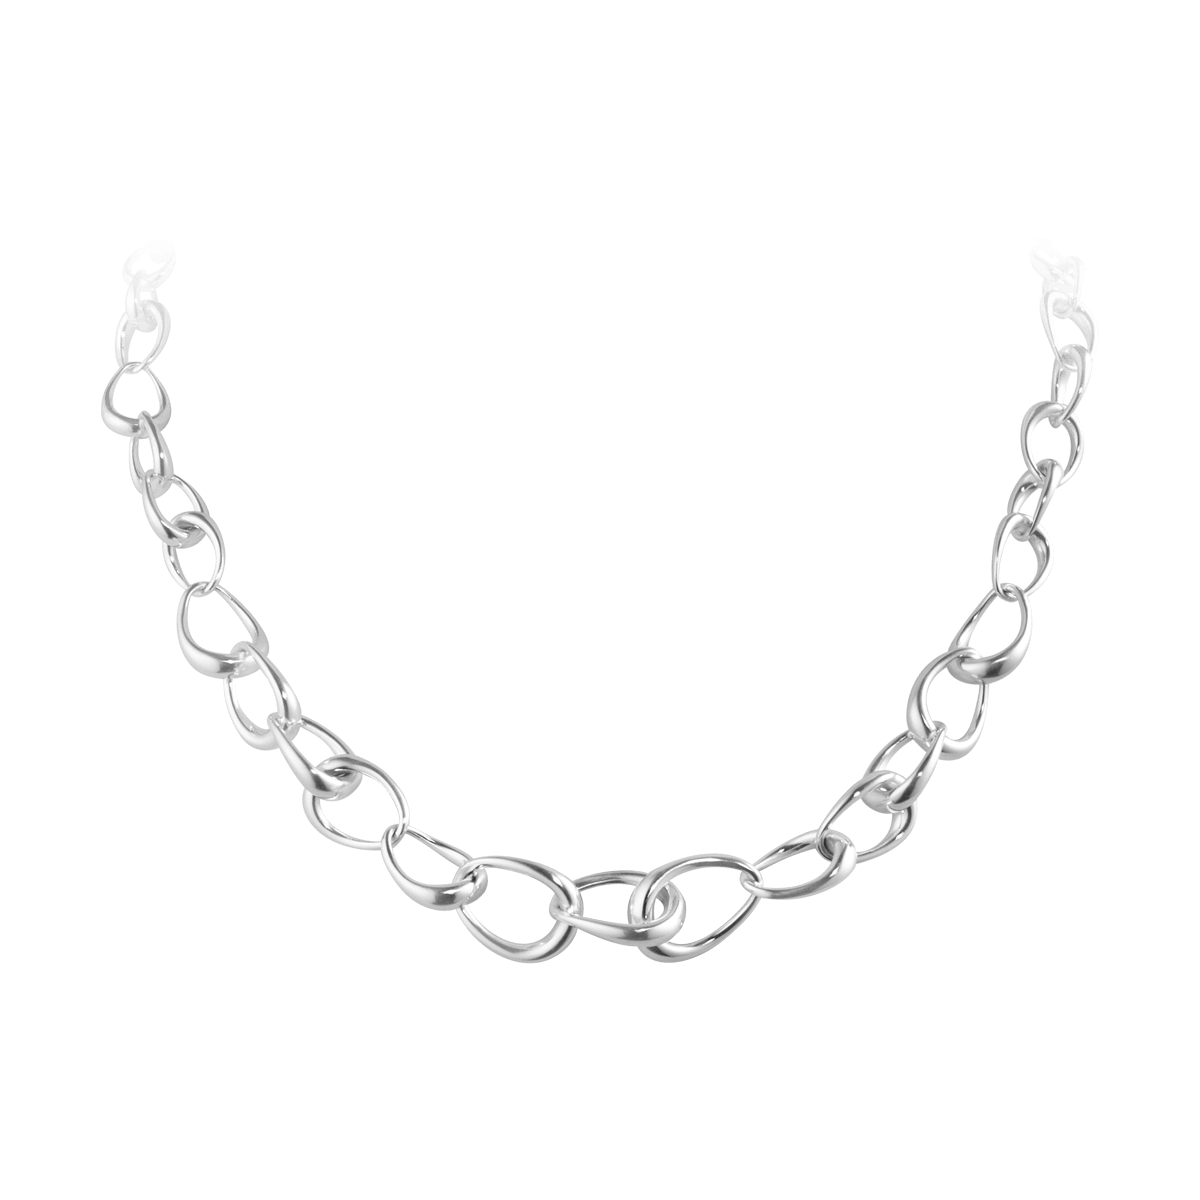 georg jensen offspring necklace in sterling silver 10012558